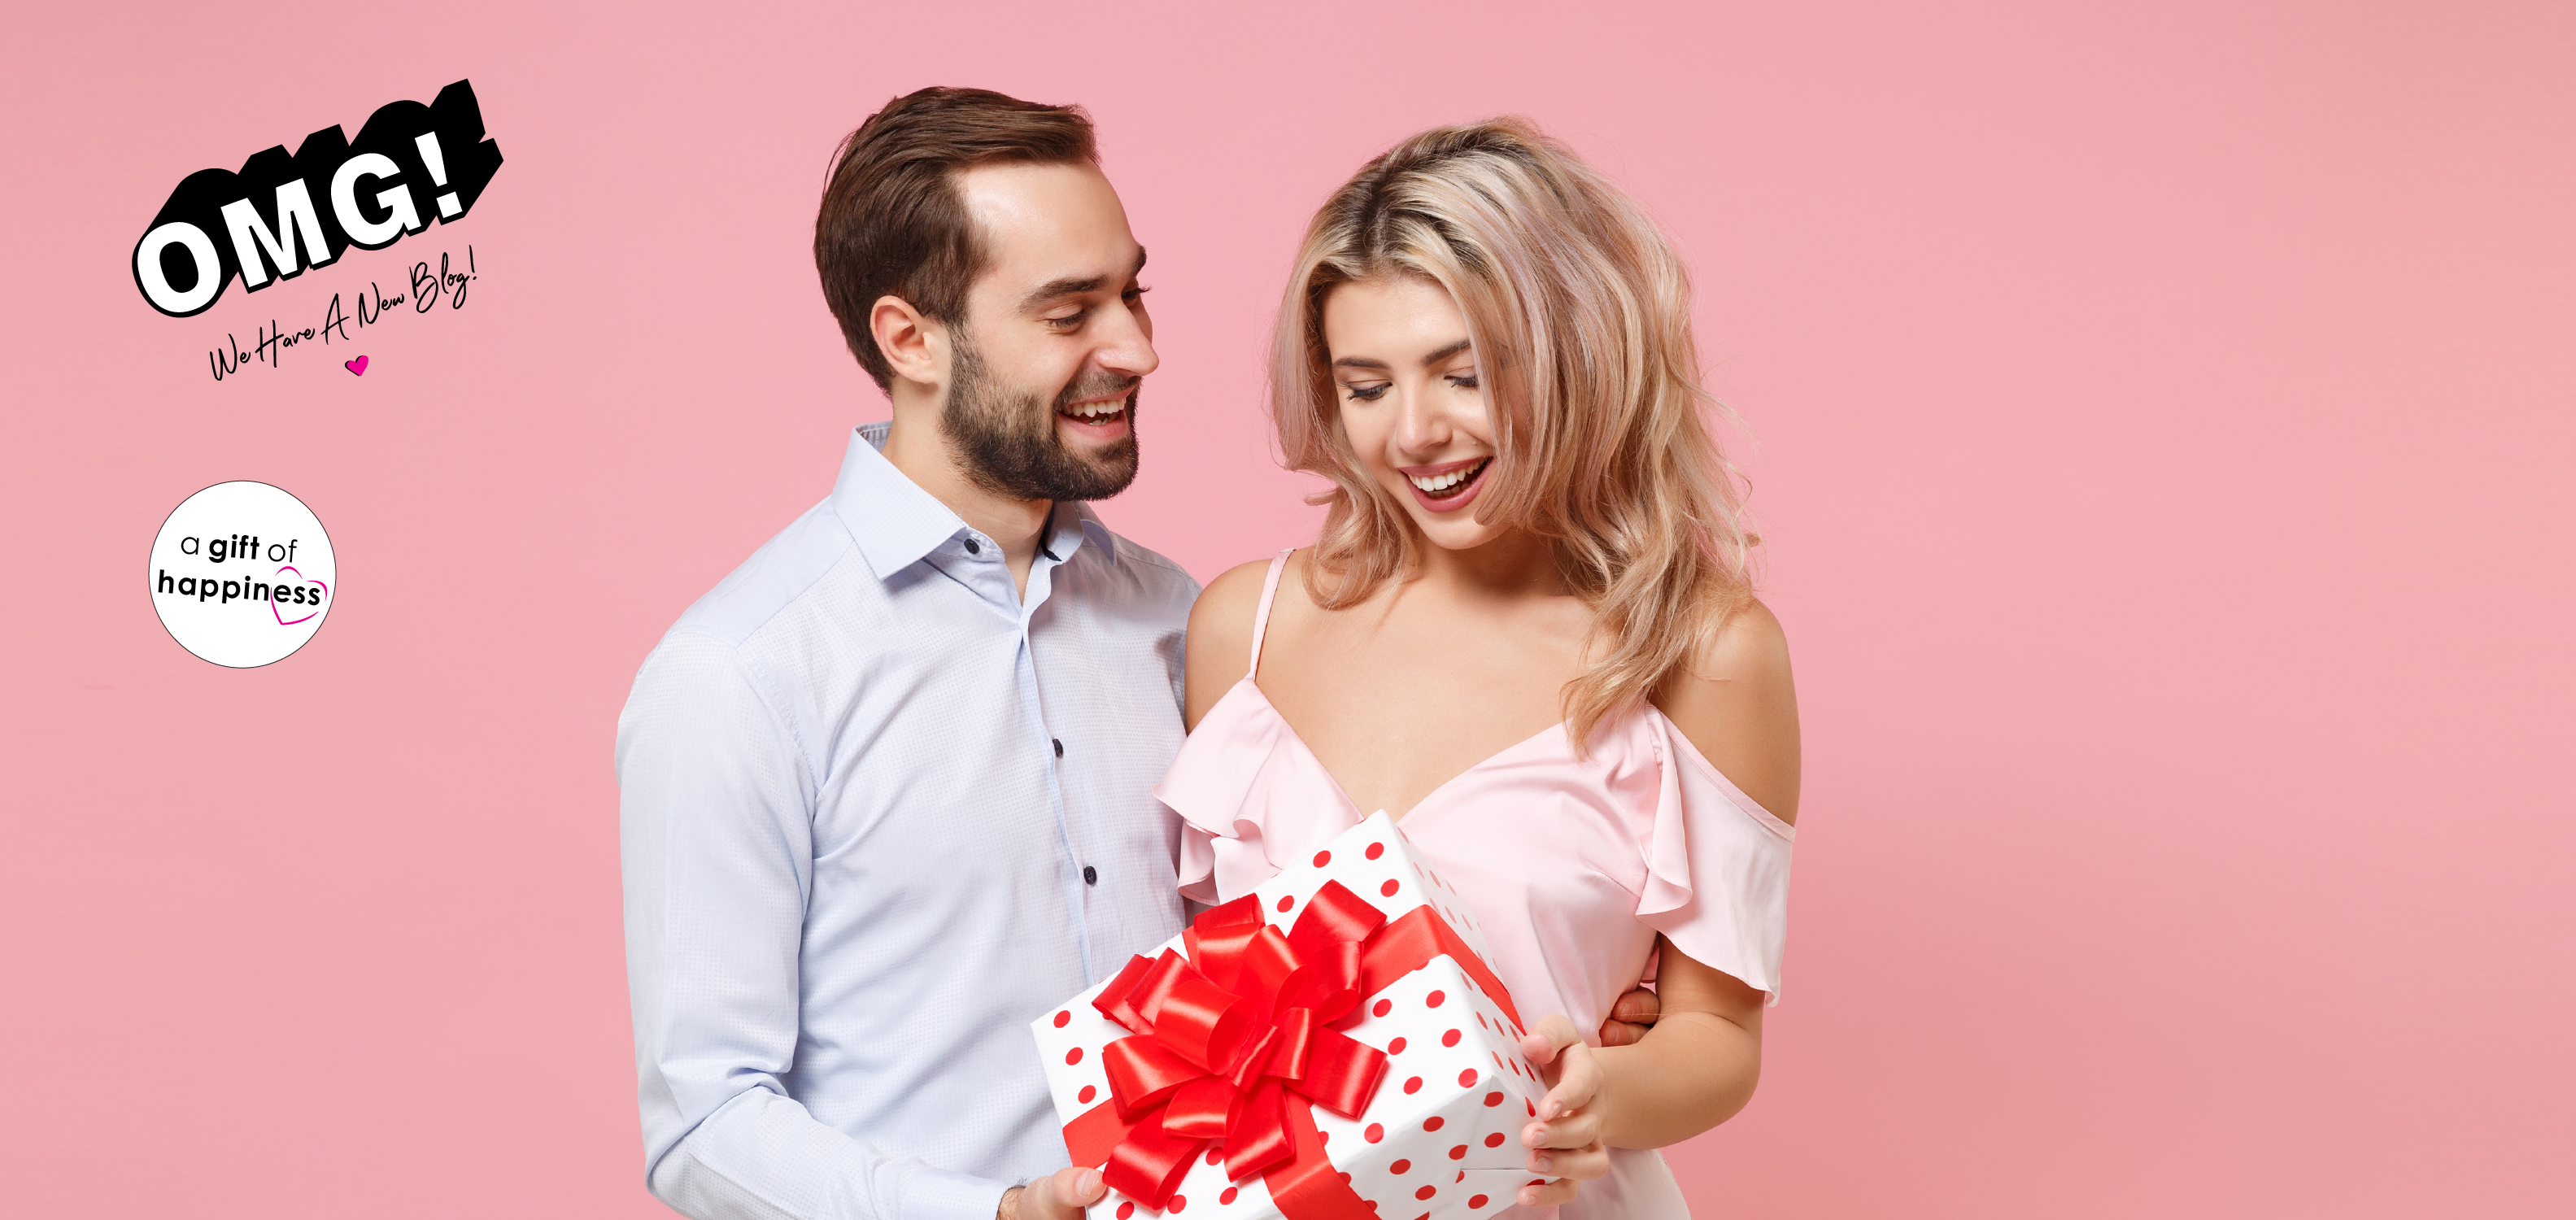 Thoughtful yet romantic DatingAnniversary gift ideas